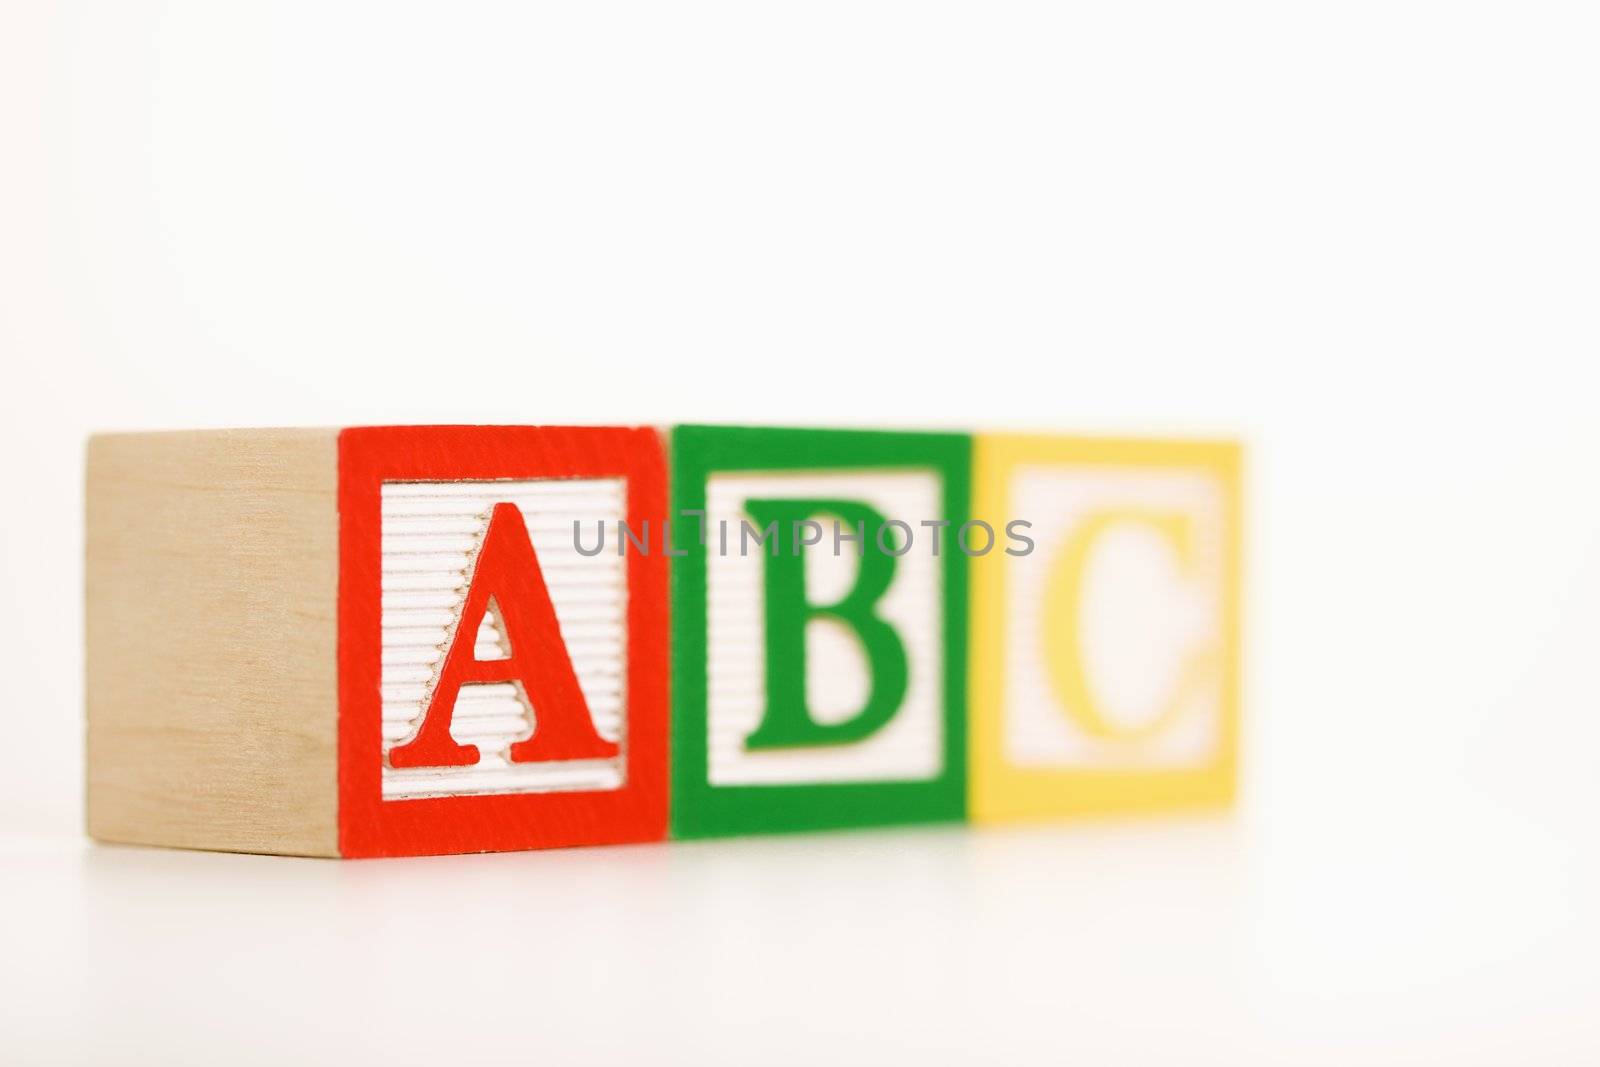 ABC alphabet blocks lined up.